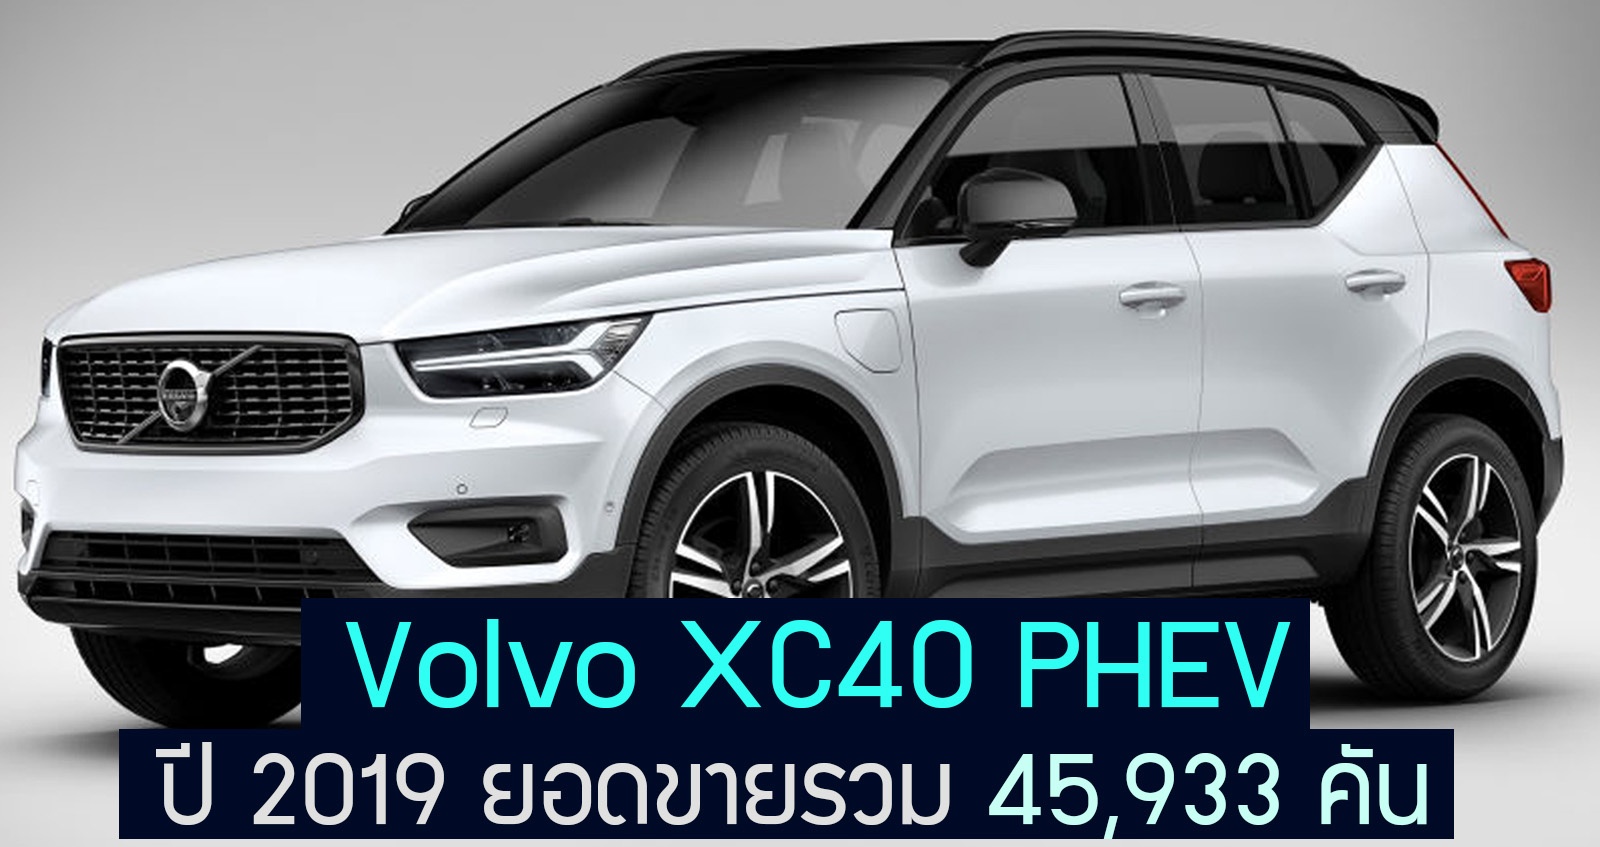 Volvo XC40 PHEV ปี 2019 ยอดขายรวม 45,933 คัน